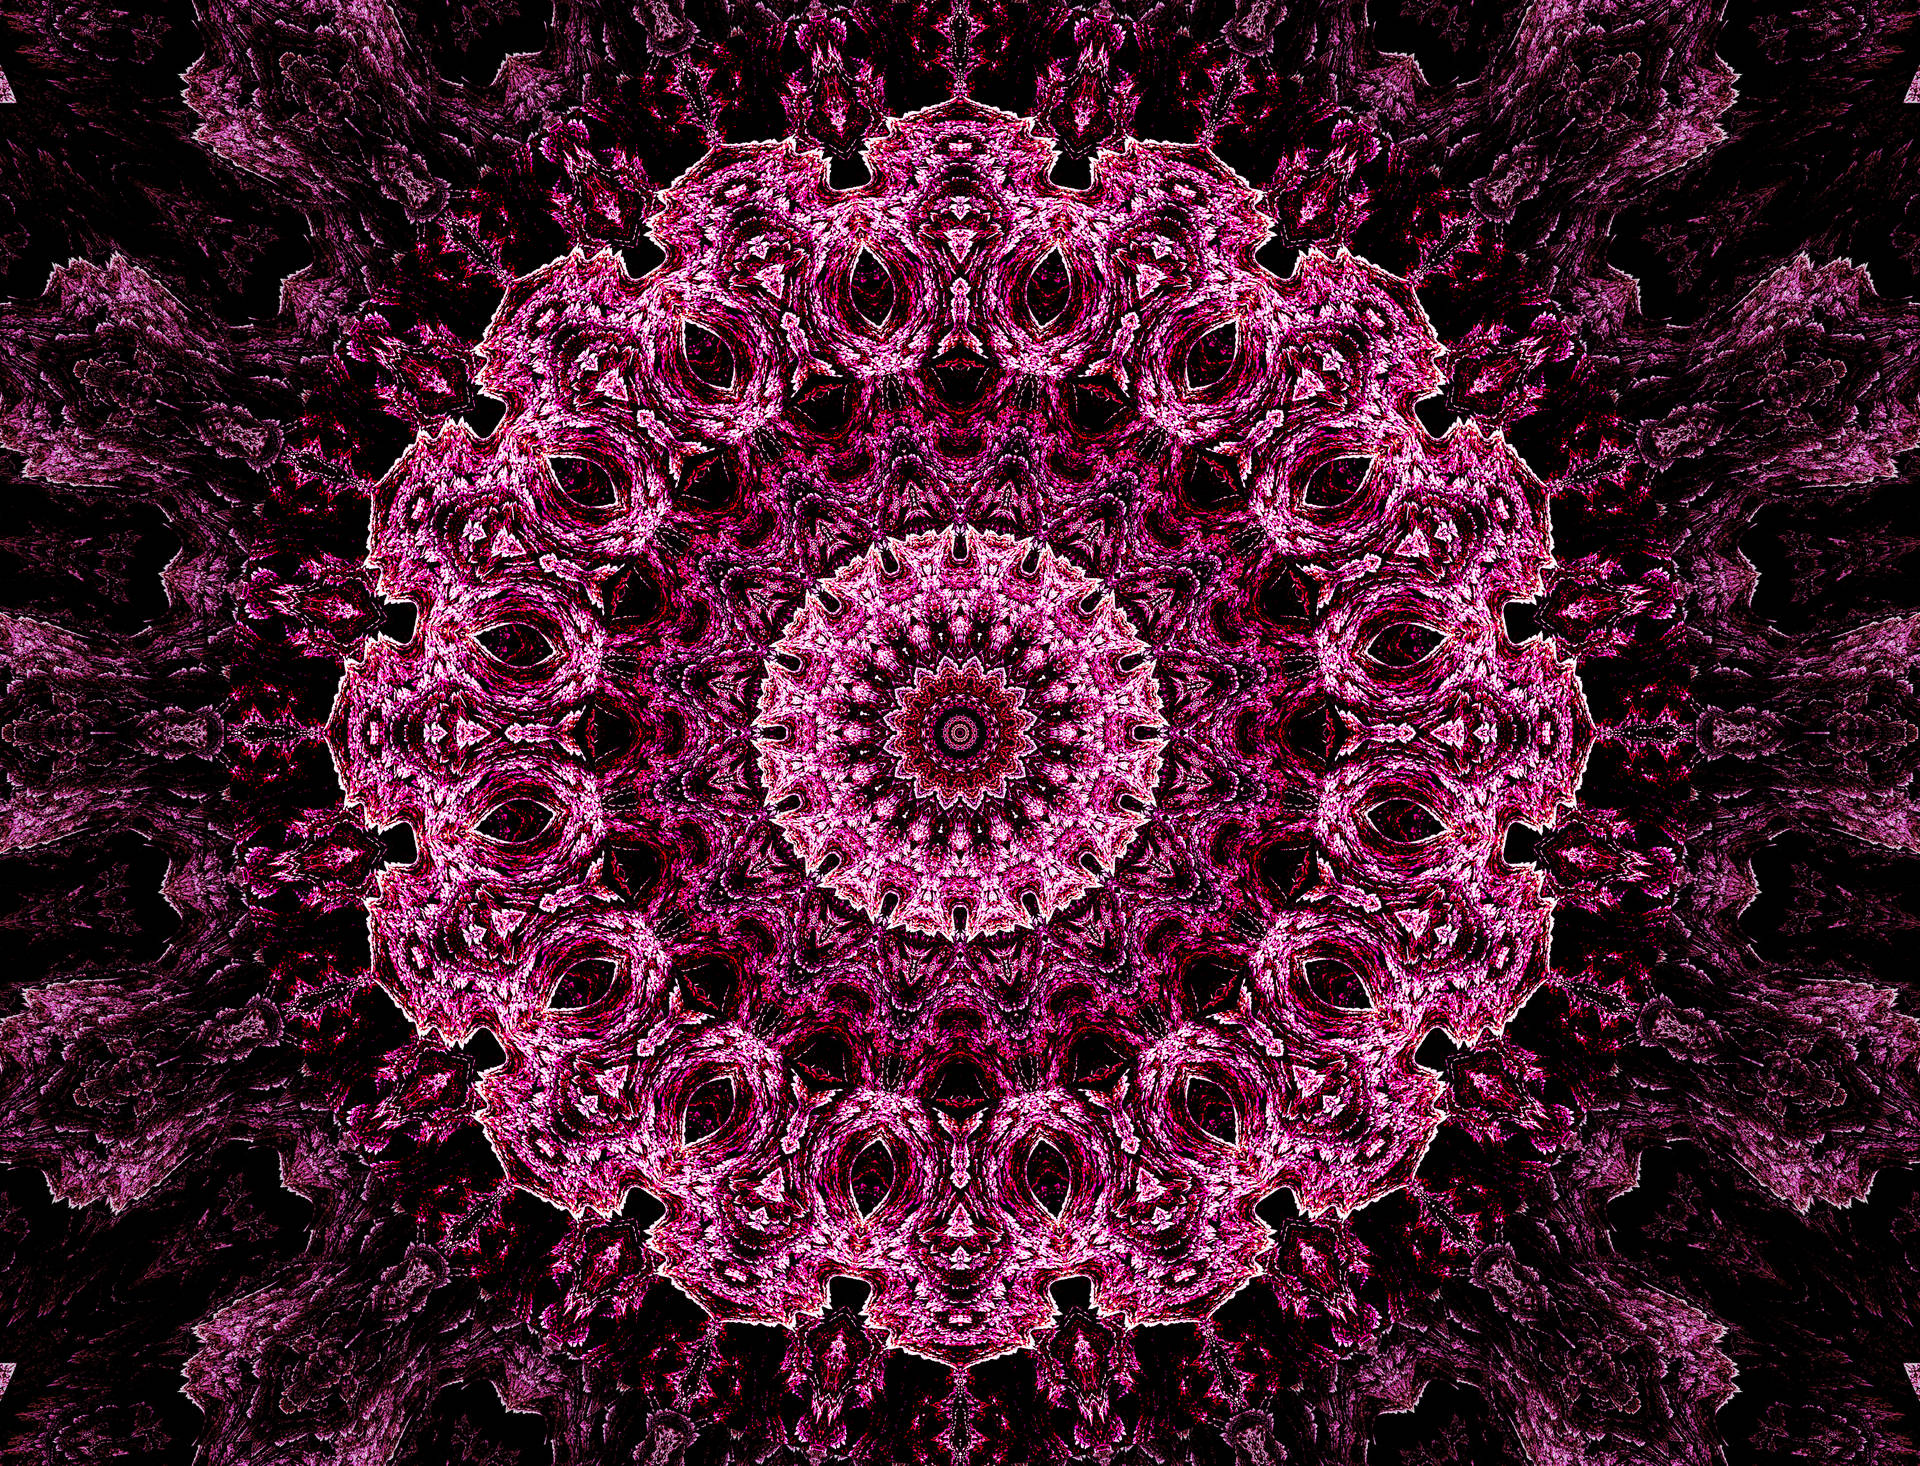 Mandala 6000X4580 Wallpaper and Background Image